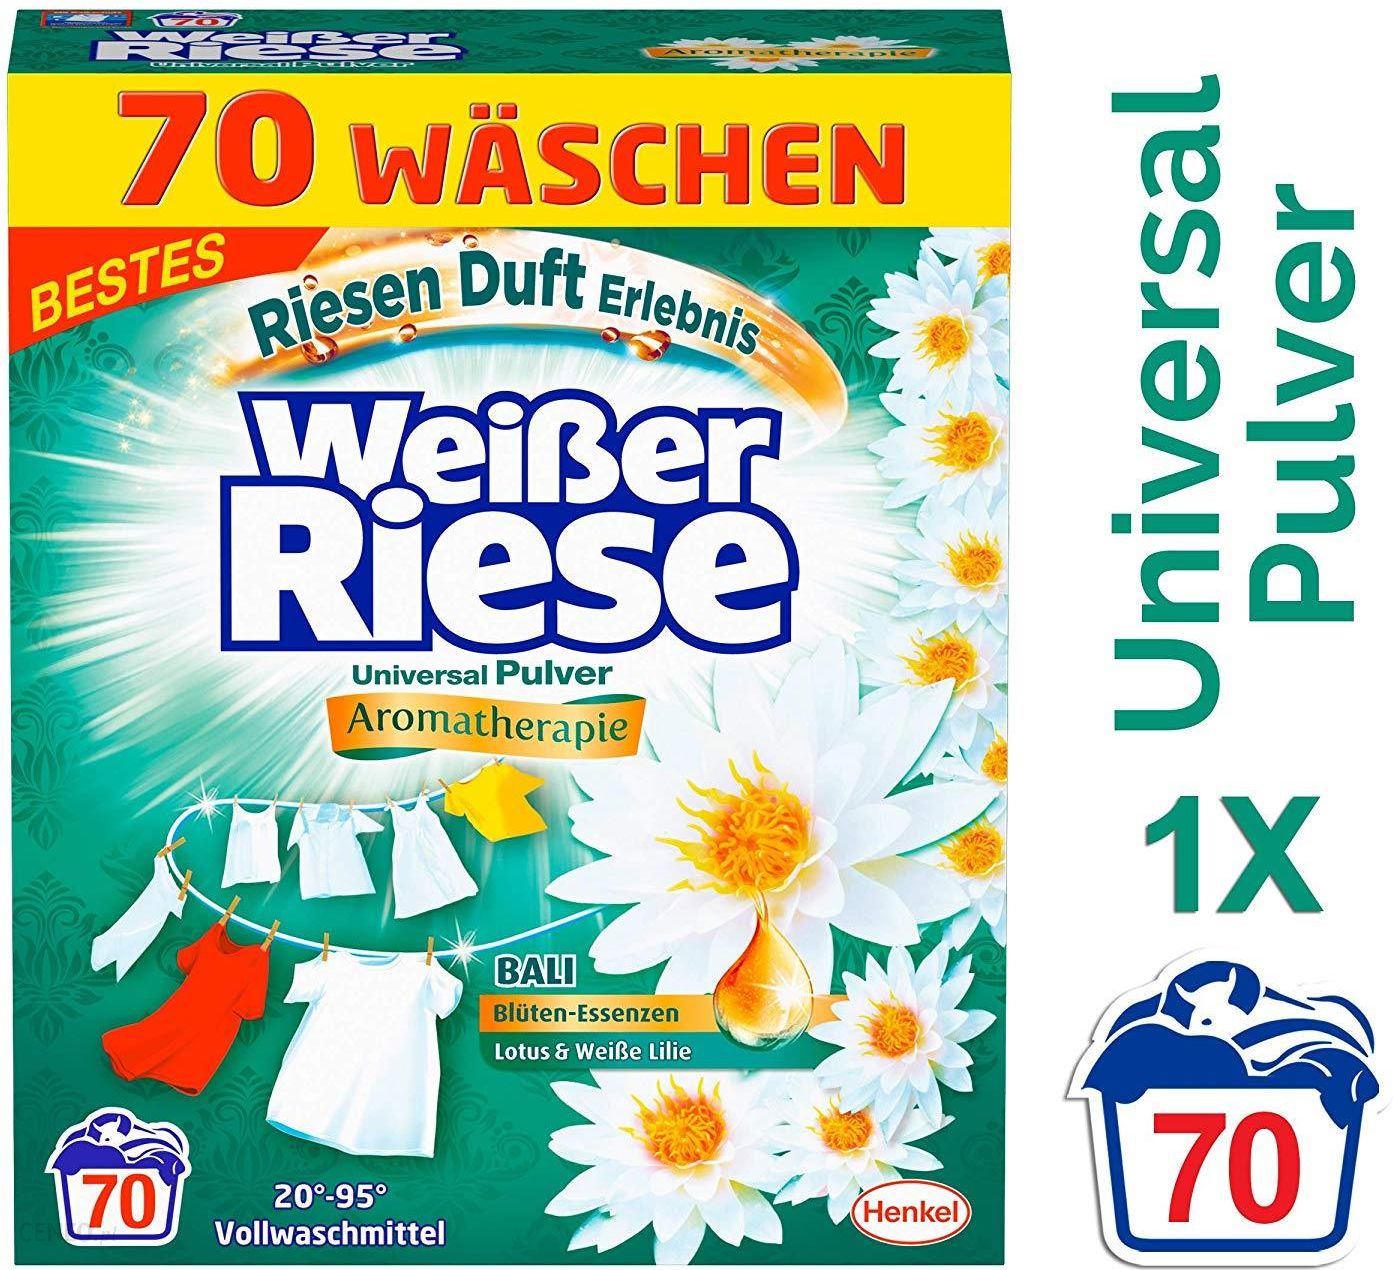 Weisser Riese Universal 70 ceny & atrakcyjne Lilie kg - Bali 3,85 i Lotus White na Pulver prań Opinie